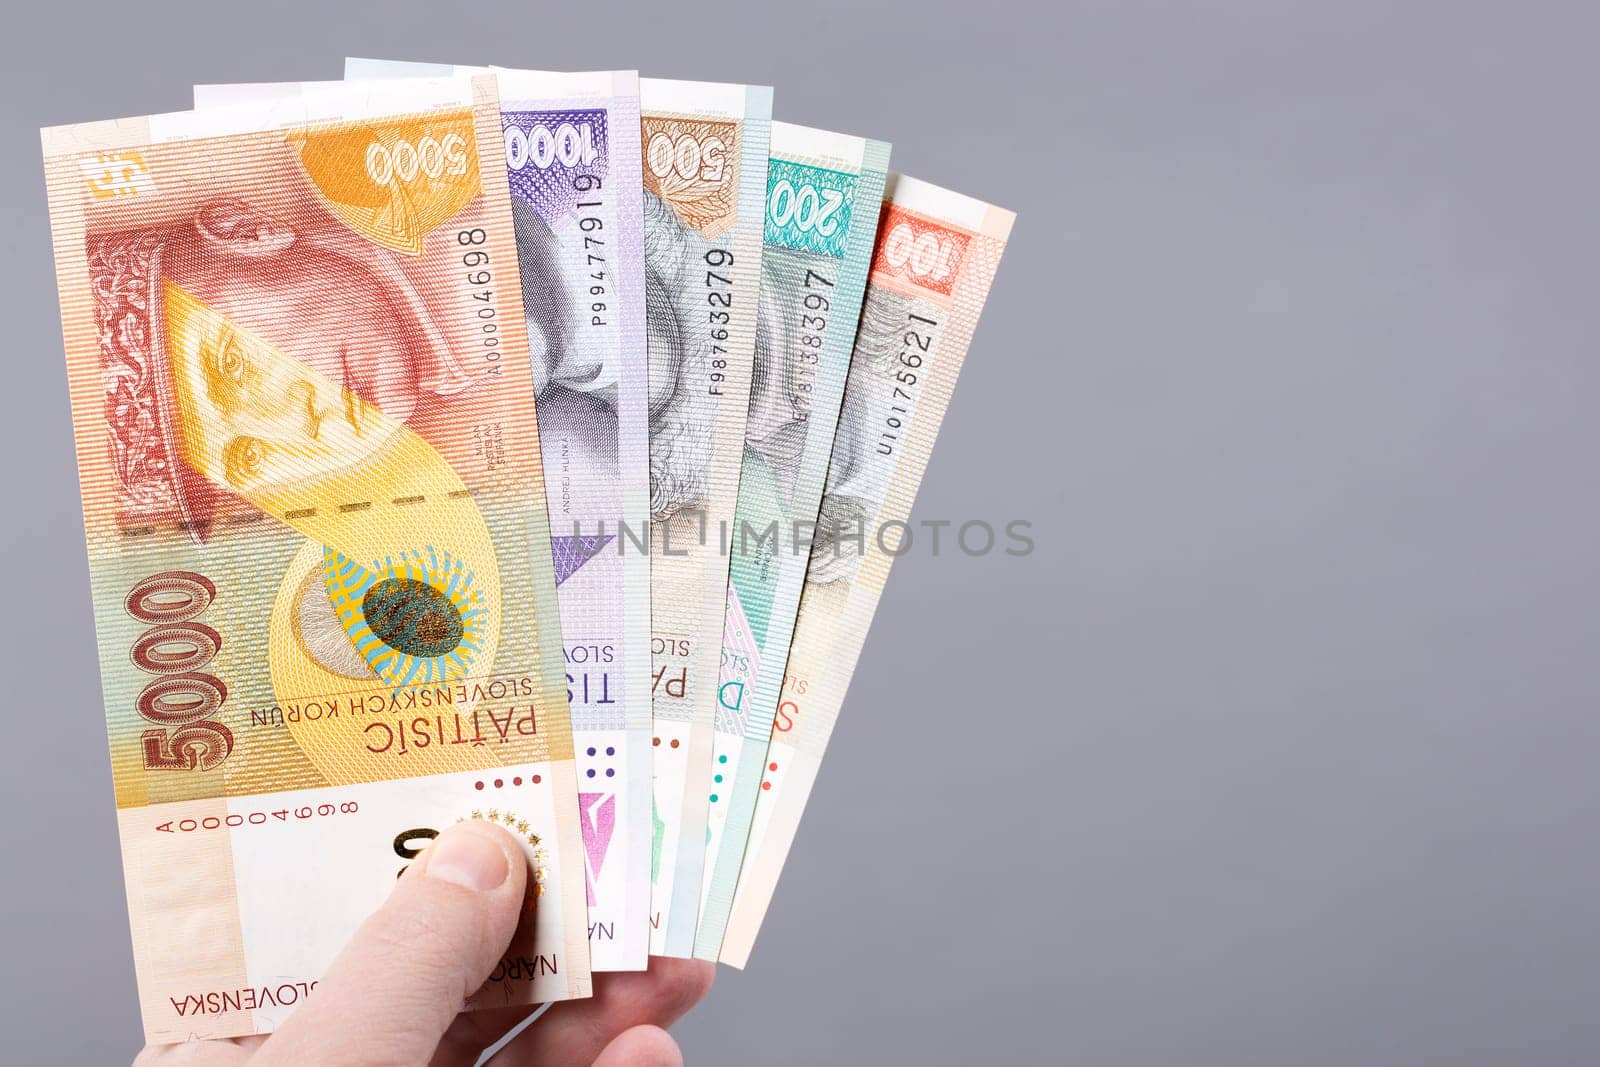 Slovak money - crowns on a gray background